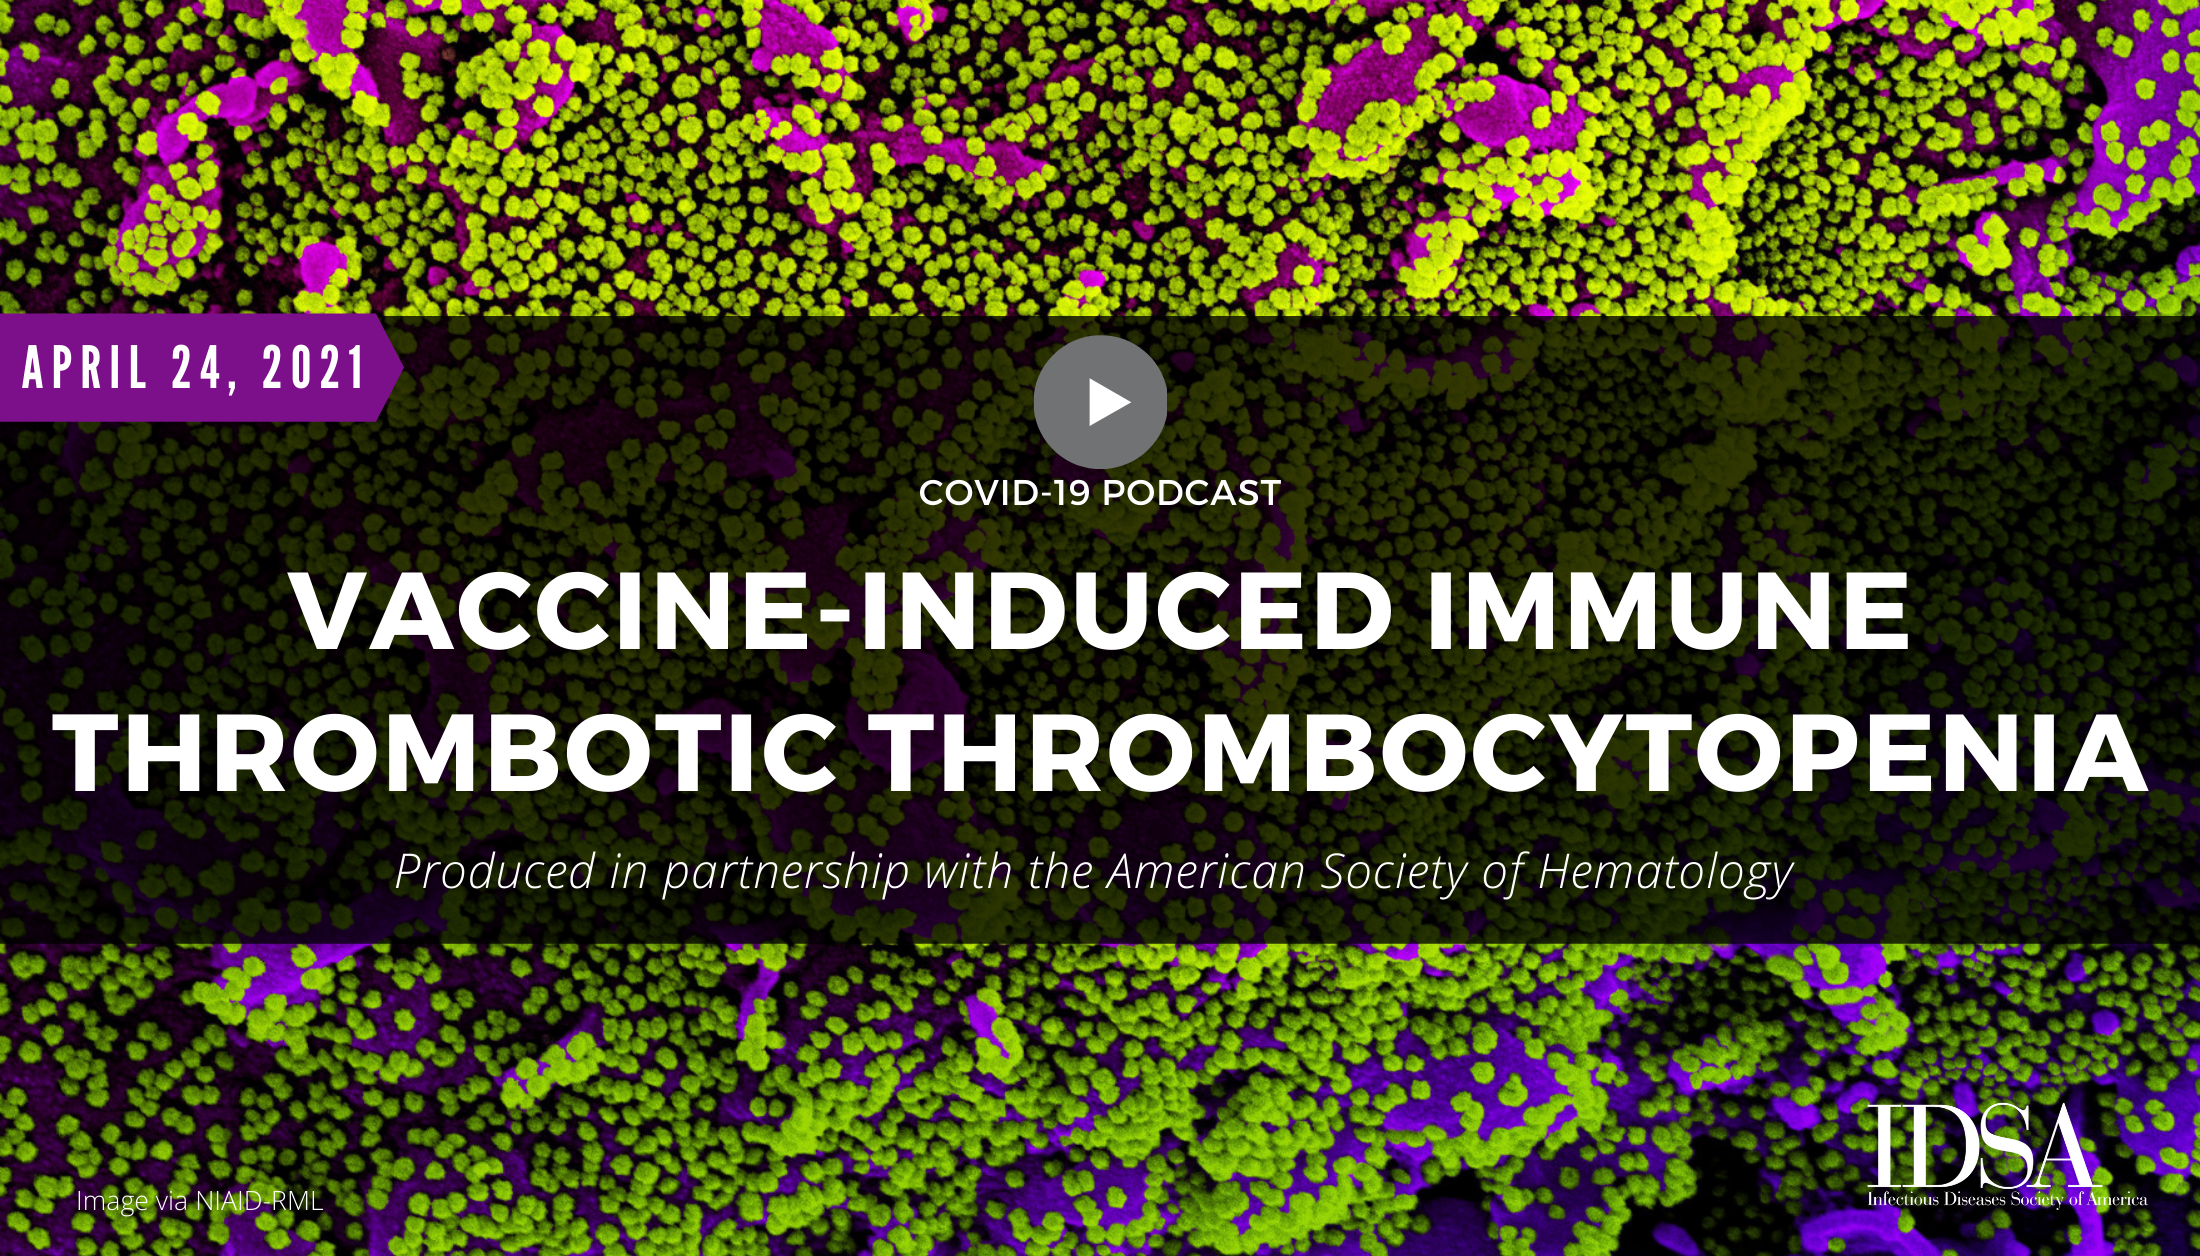 Thrombosis with thrombocytopenia syndrome